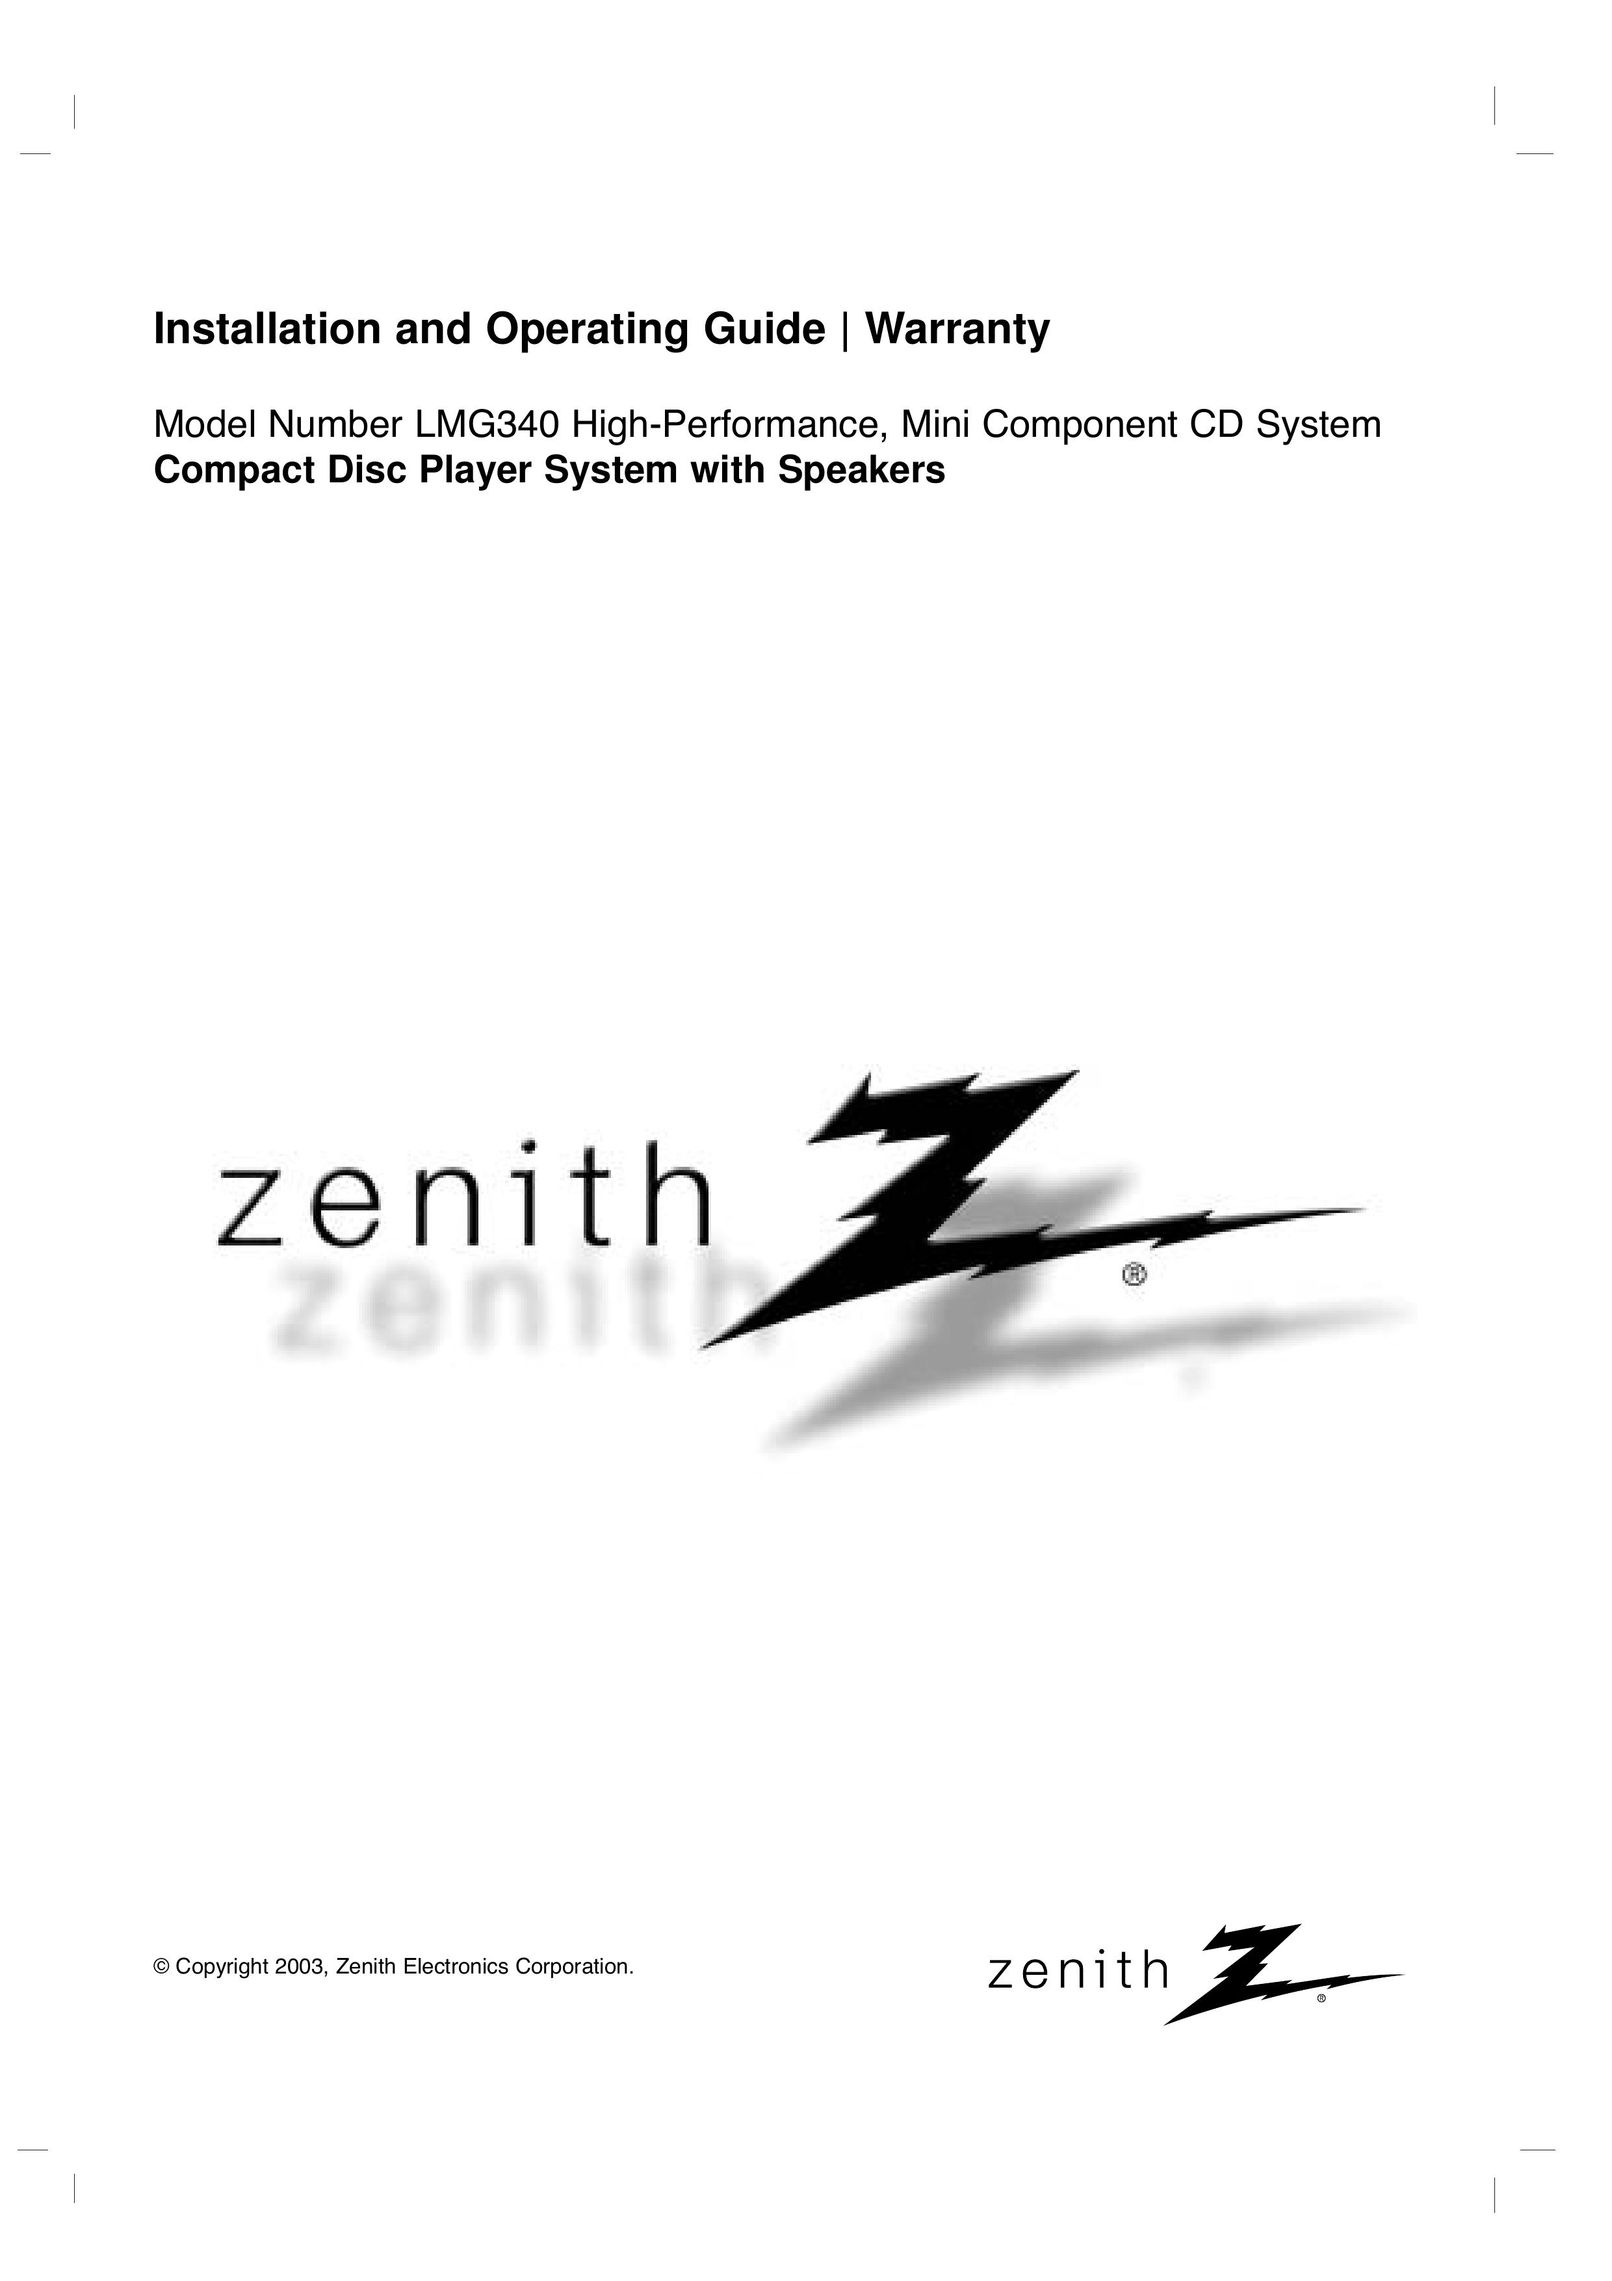 Zenith LMG340 CD Player User Manual